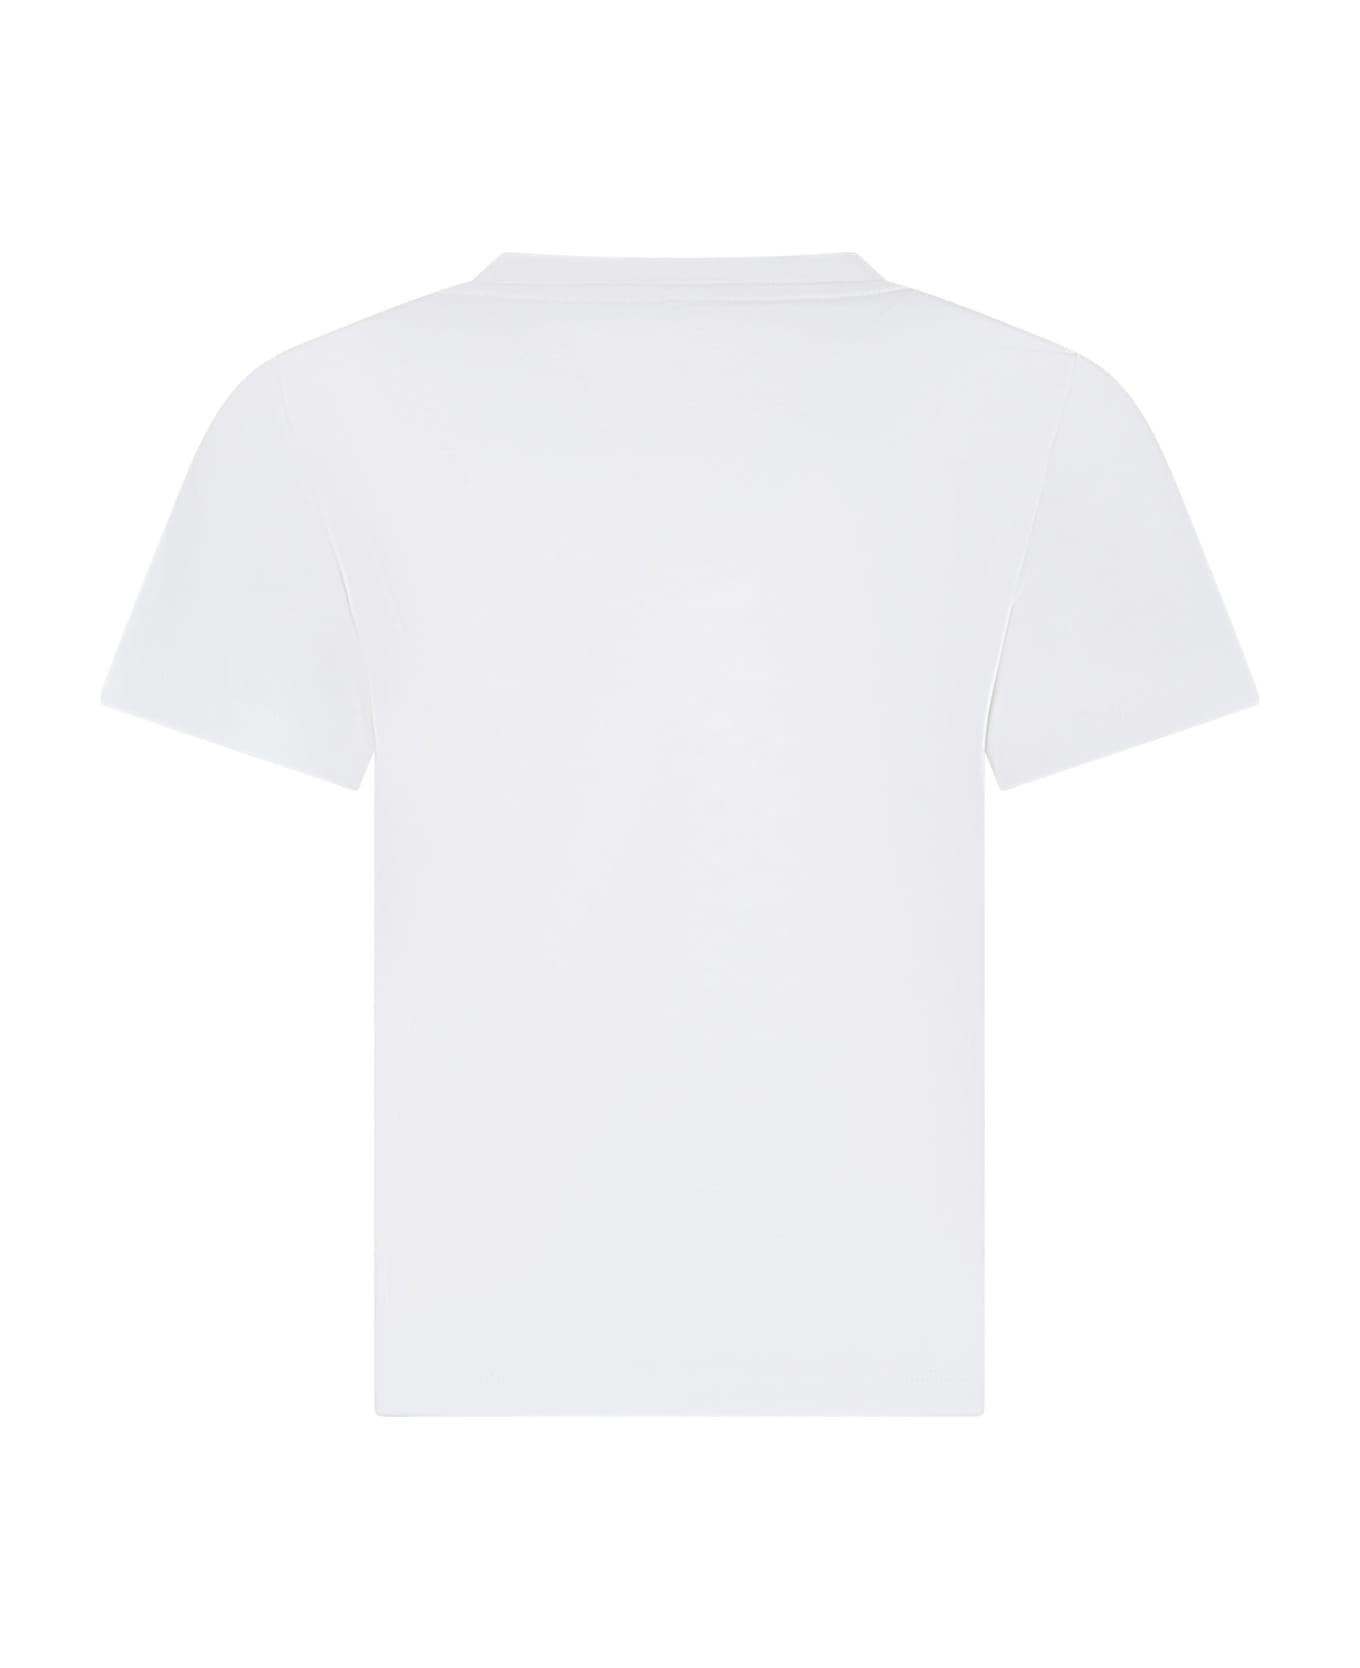 Stella McCartney Kids White T-shirt For Boy With Hammerhead Shark - White Tシャツ＆ポロシャツ